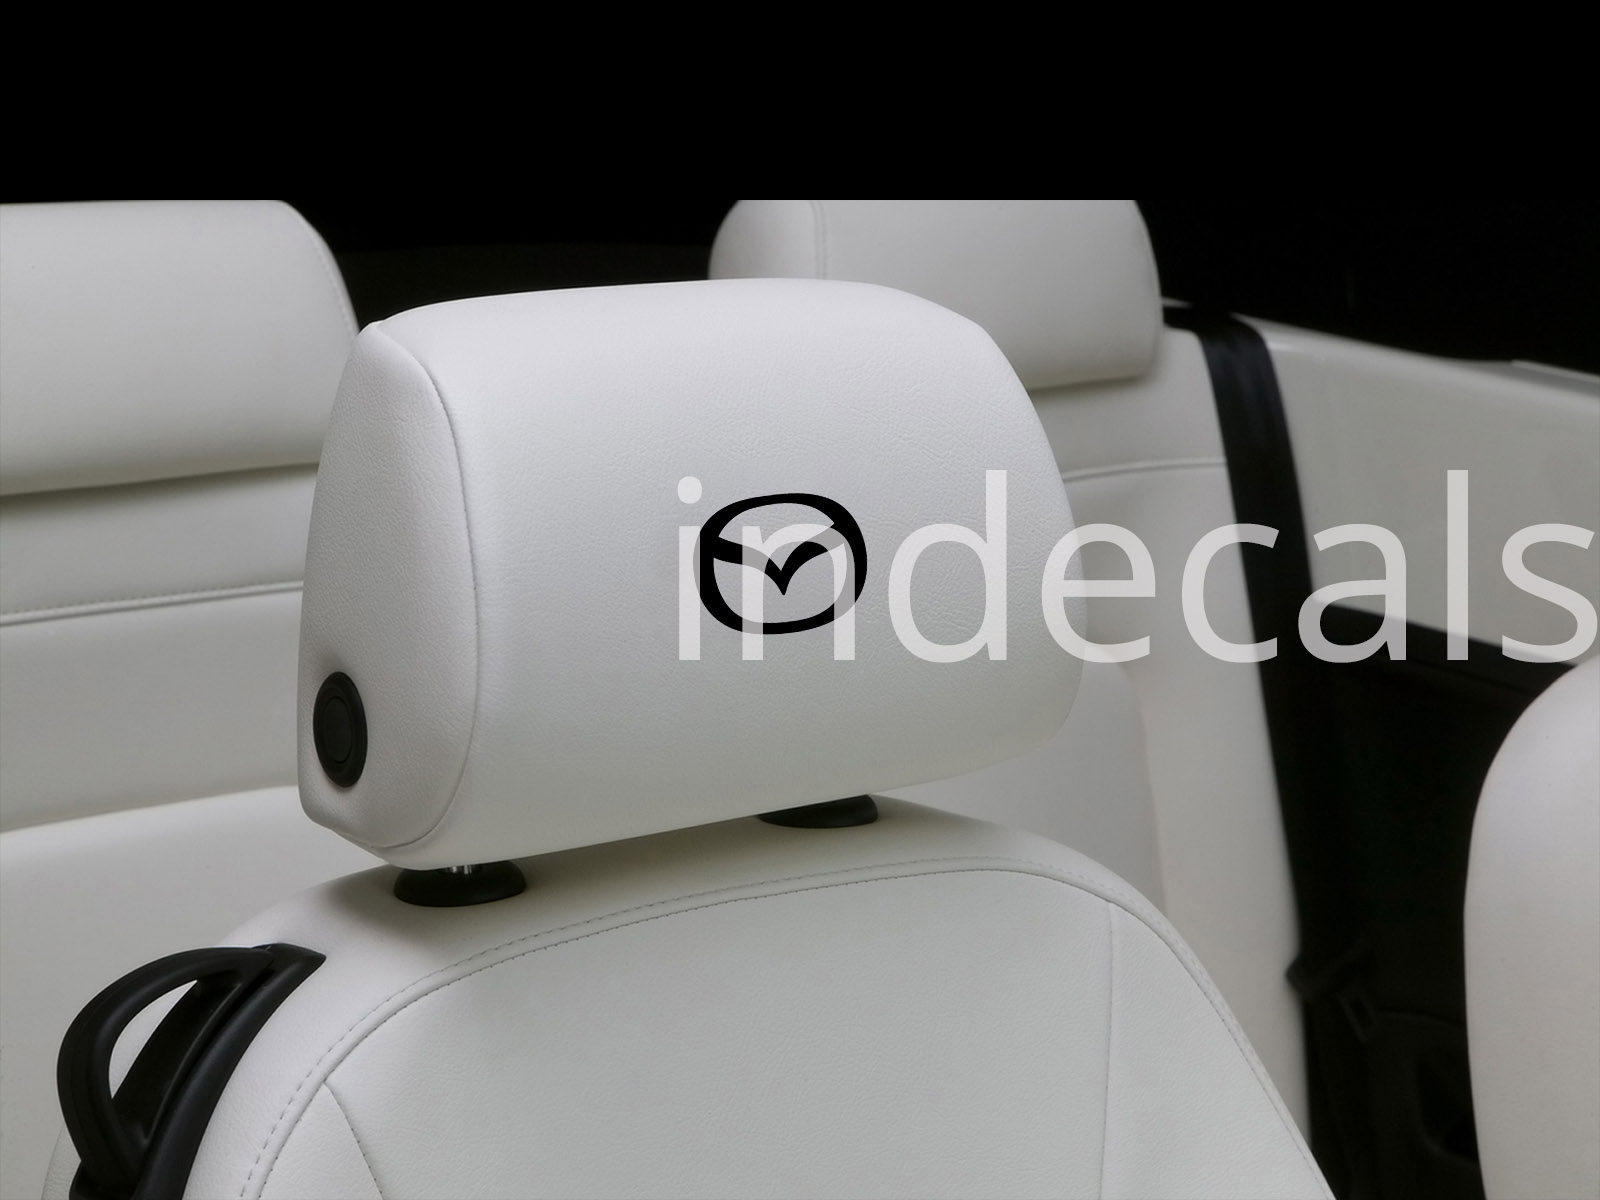 6 x Mazda Stickers for Headrests - Black